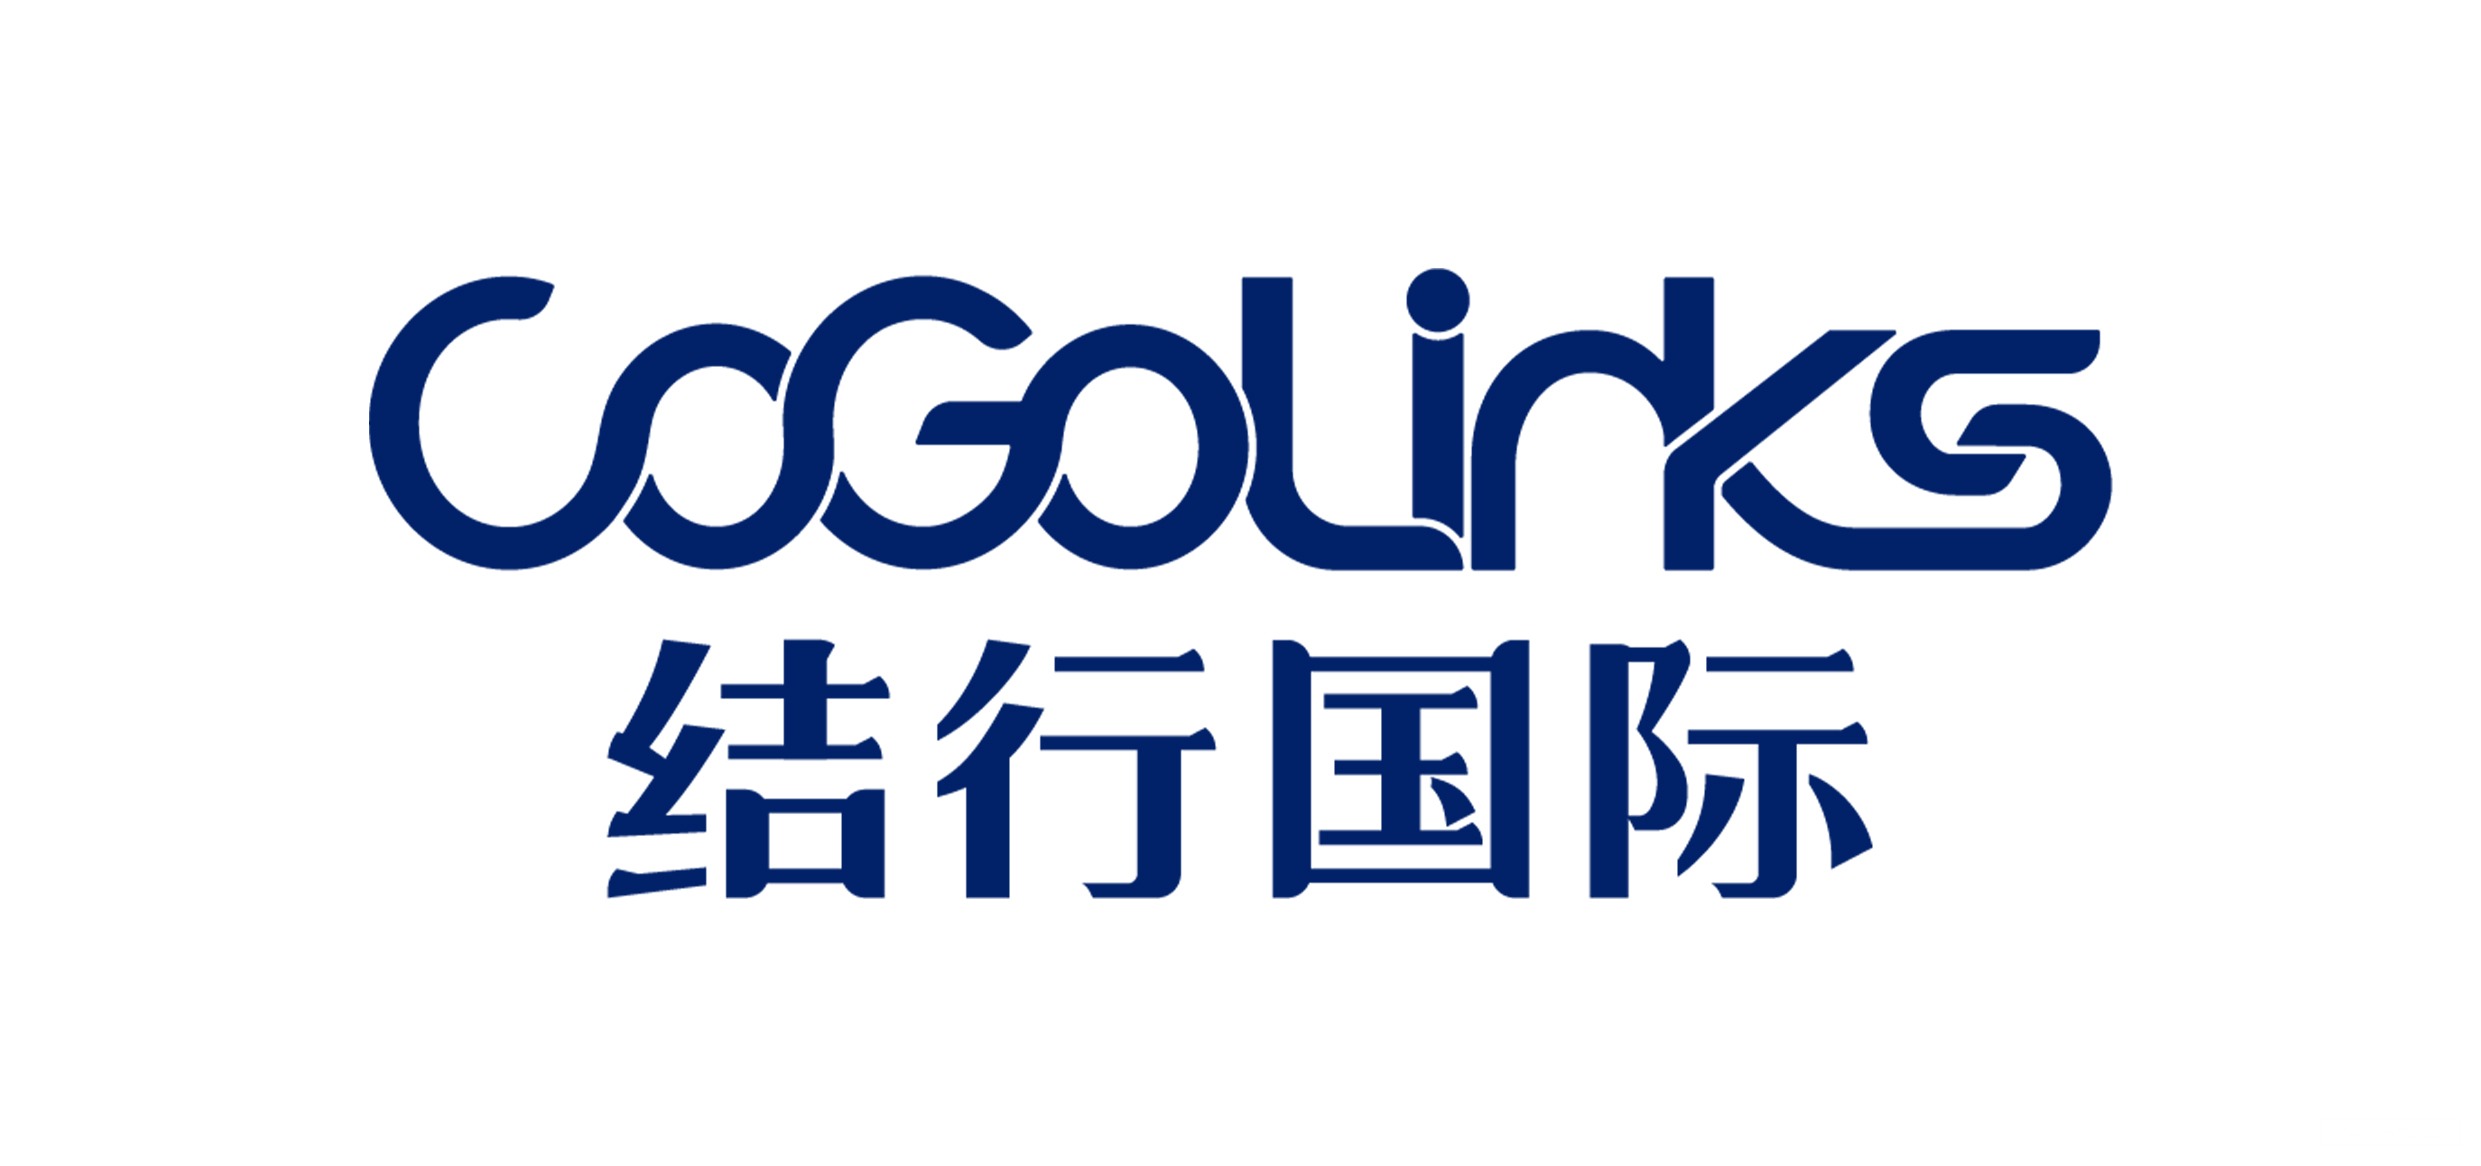 CoGoLinks巴西本地收款账户上线